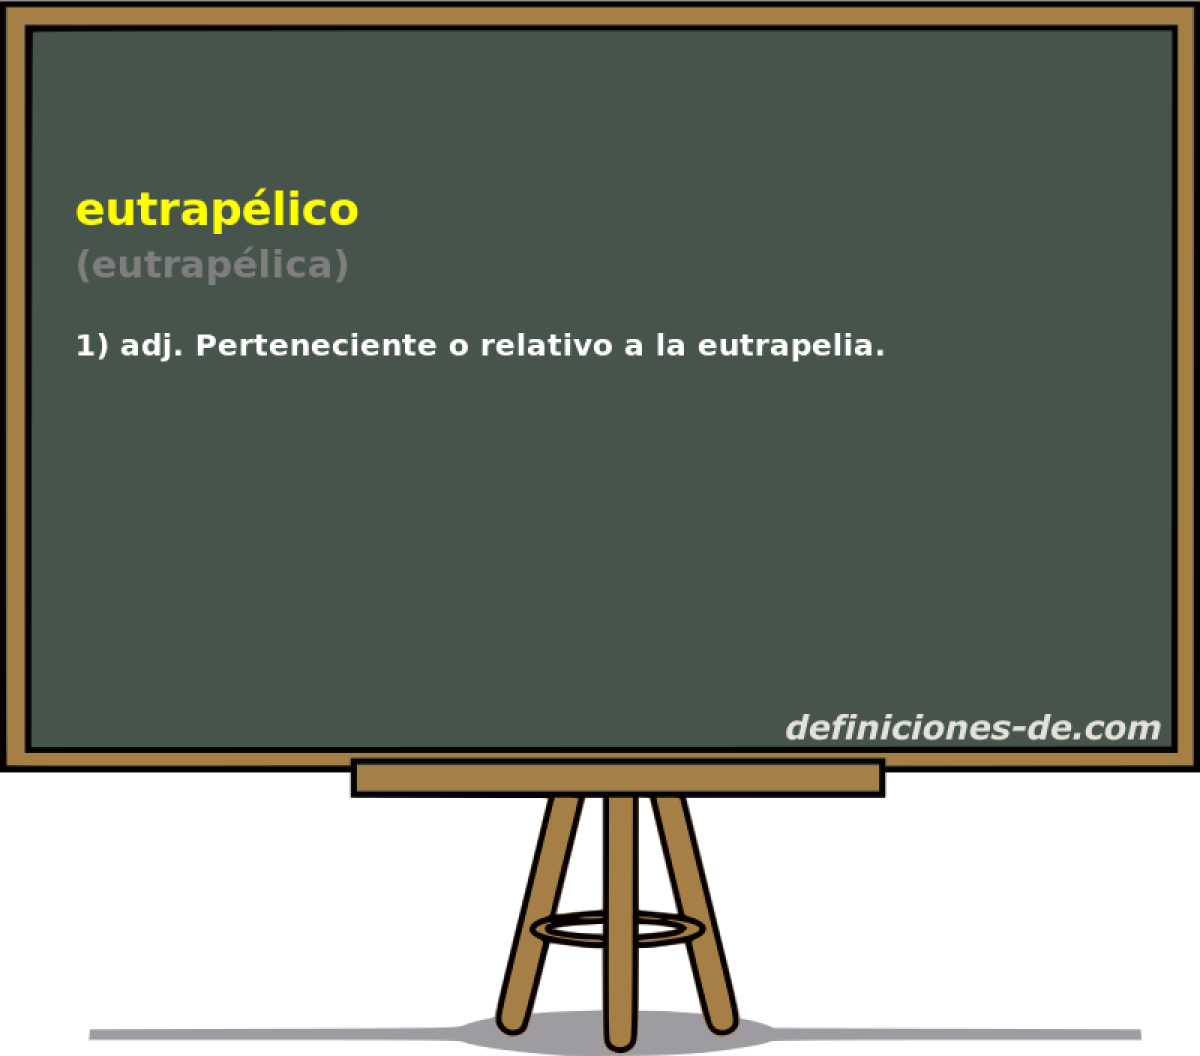 eutraplico (eutraplica)